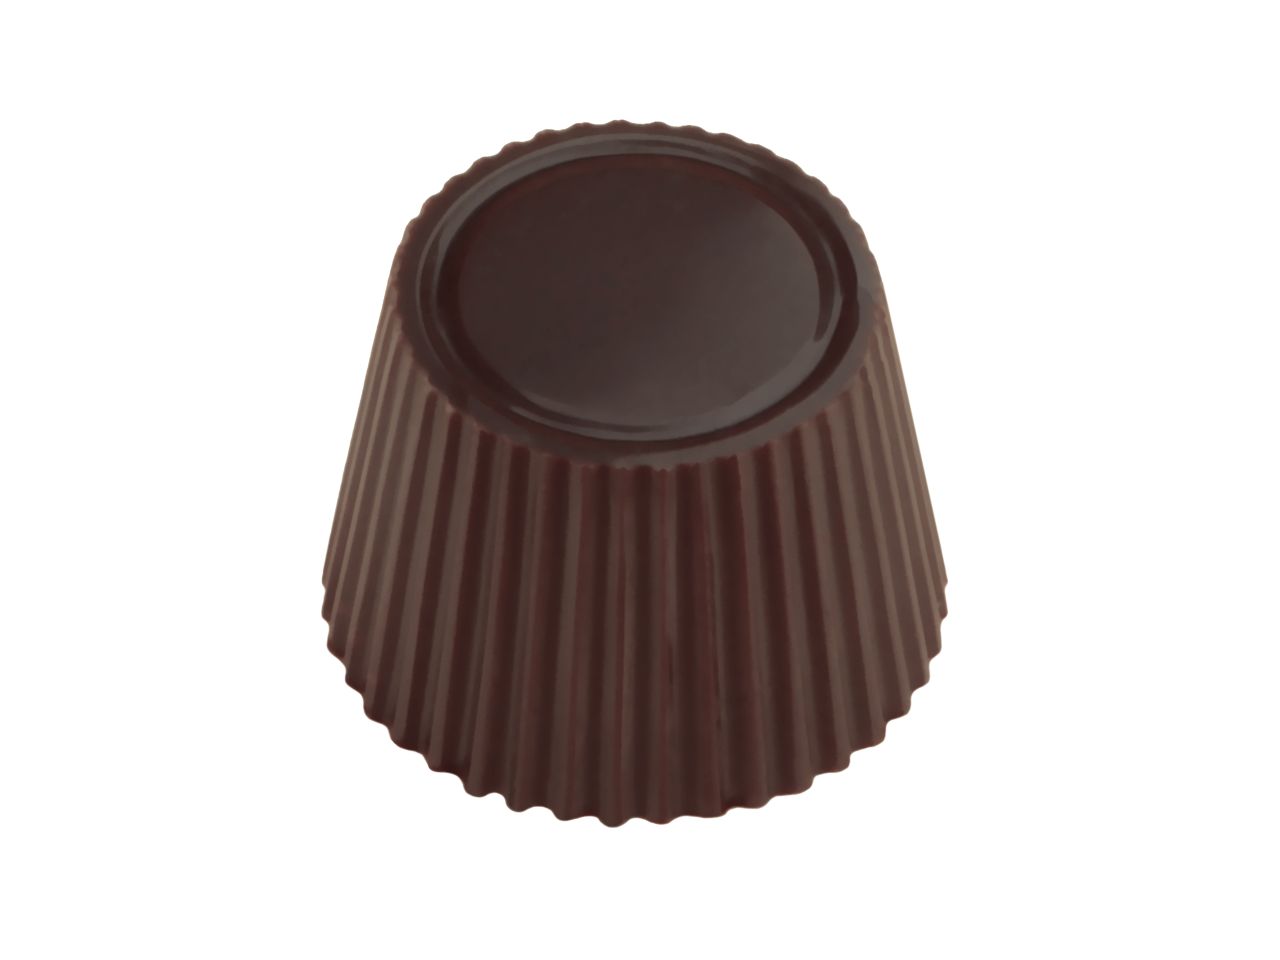 Schokoladenform: Nouvel Praliné, Kunststoff, transparent, 21 Mulden à 22 x 20 mm